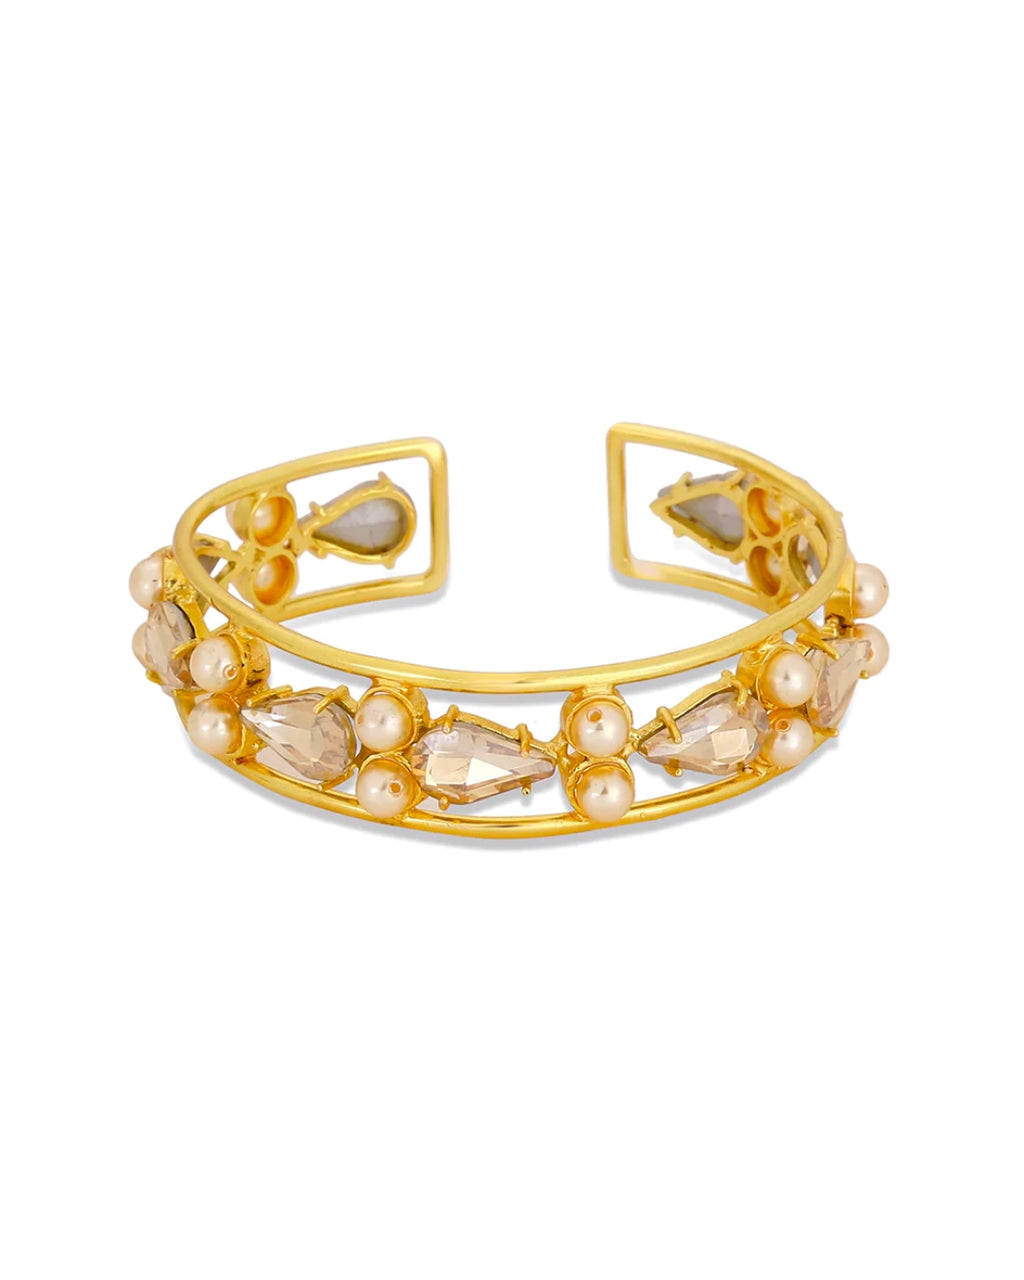 Samara Cuff - Bracelets & Cuffs - Handcrafted Jewellery - Made in India - Dubai Jewellery, Fashion & Lifestyle - Dori